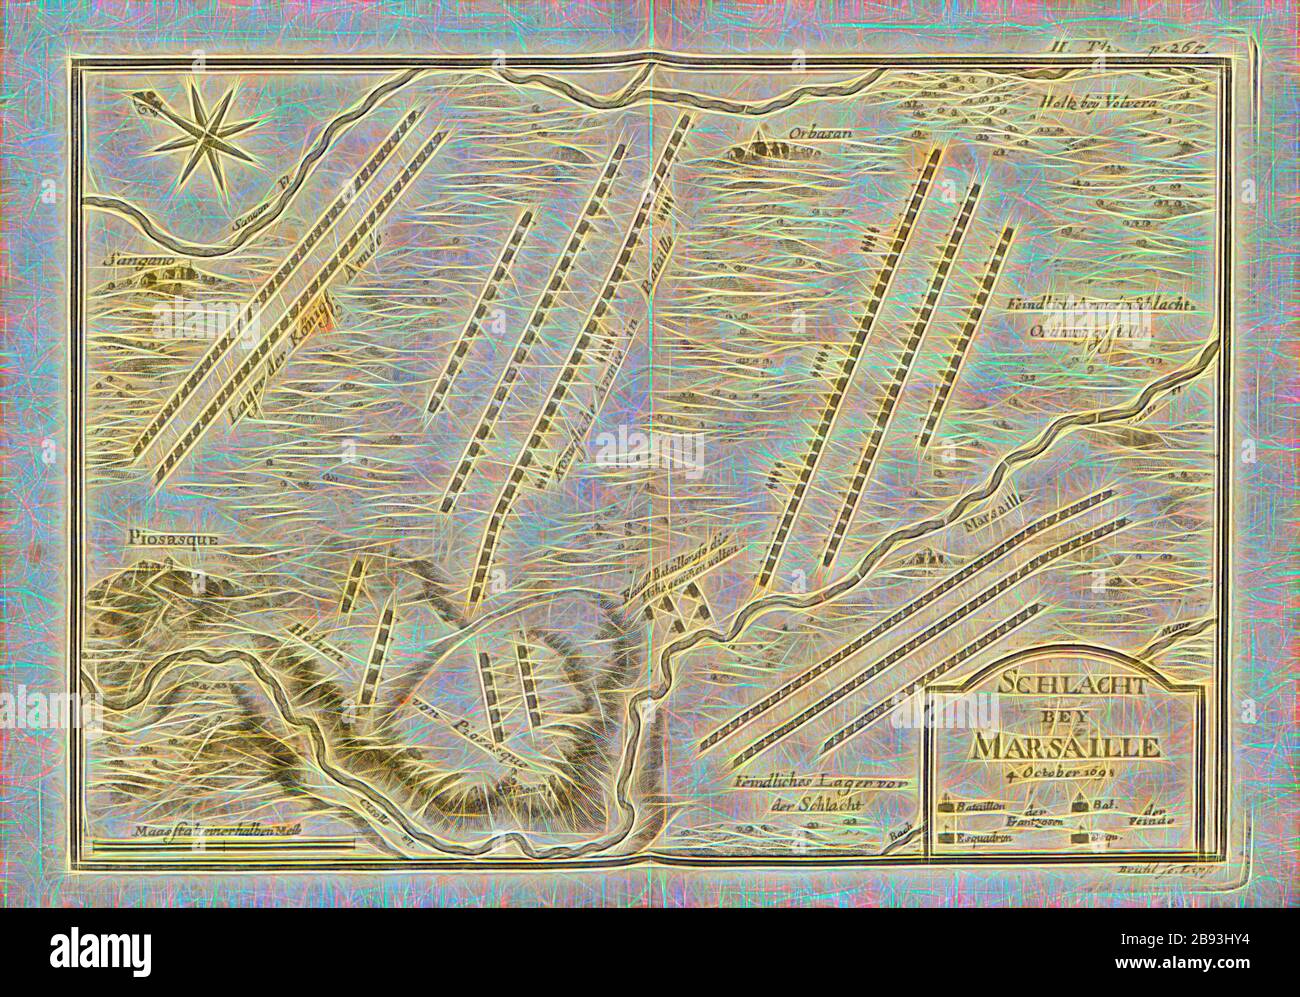 Battle of Marseille, Map of the Battle of Marsaglia on October 4, 1693 (also Battle of Orbassano), Signed: Brühl sc, Fig. 1, II. Th, after p. 266, Brühl, Johann Benjamin (sc.), 1738, Antoine de Pas de Feuquières: Geheime und sonderbare Kriegs-Nachrichten des Marggrafen von Feuquieres. Leipzig: im Weidmannischen Buchladen, 1738, Reimagined by Gibon, design of warm cheerful glowing of brightness and light rays radiance. Classic art reinvented with a modern twist. Photography inspired by futurism, embracing dynamic energy of modern technology, movement, speed and revolutionize culture. Stock Photo